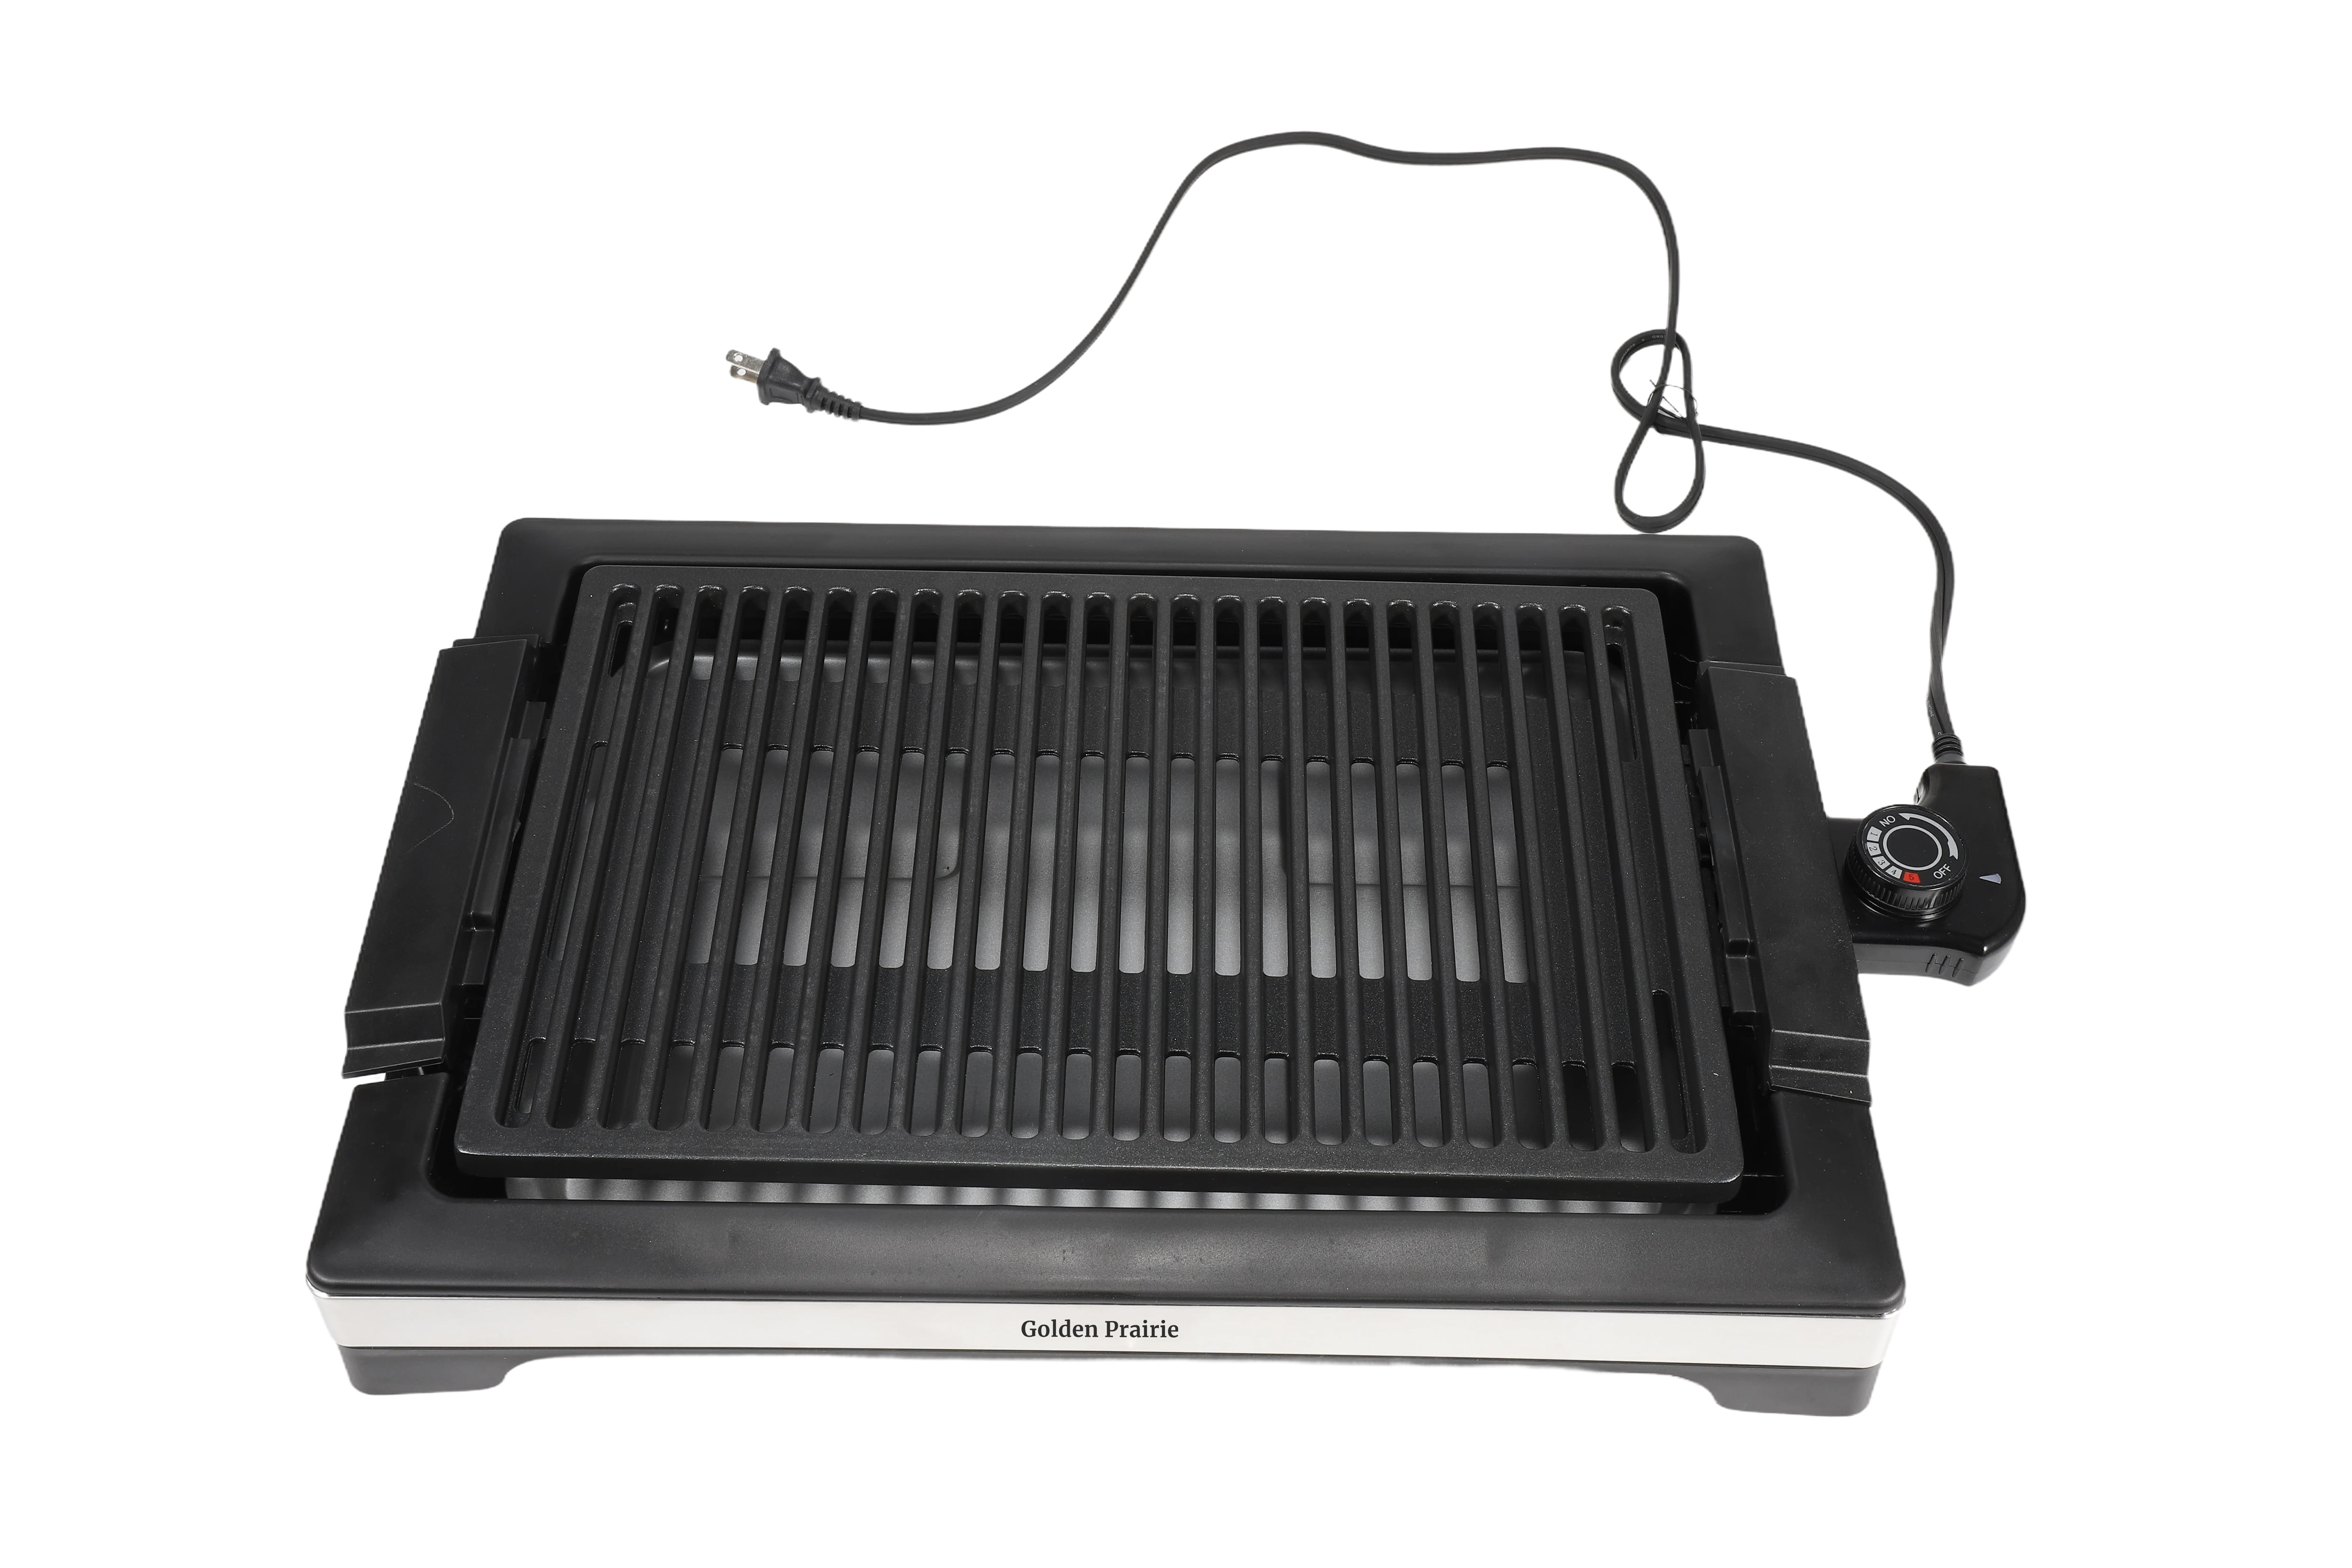 Electric Grill TG102 Indoor Smokeless, 120V 1600W, US Plug-Black –  sinopurencentre